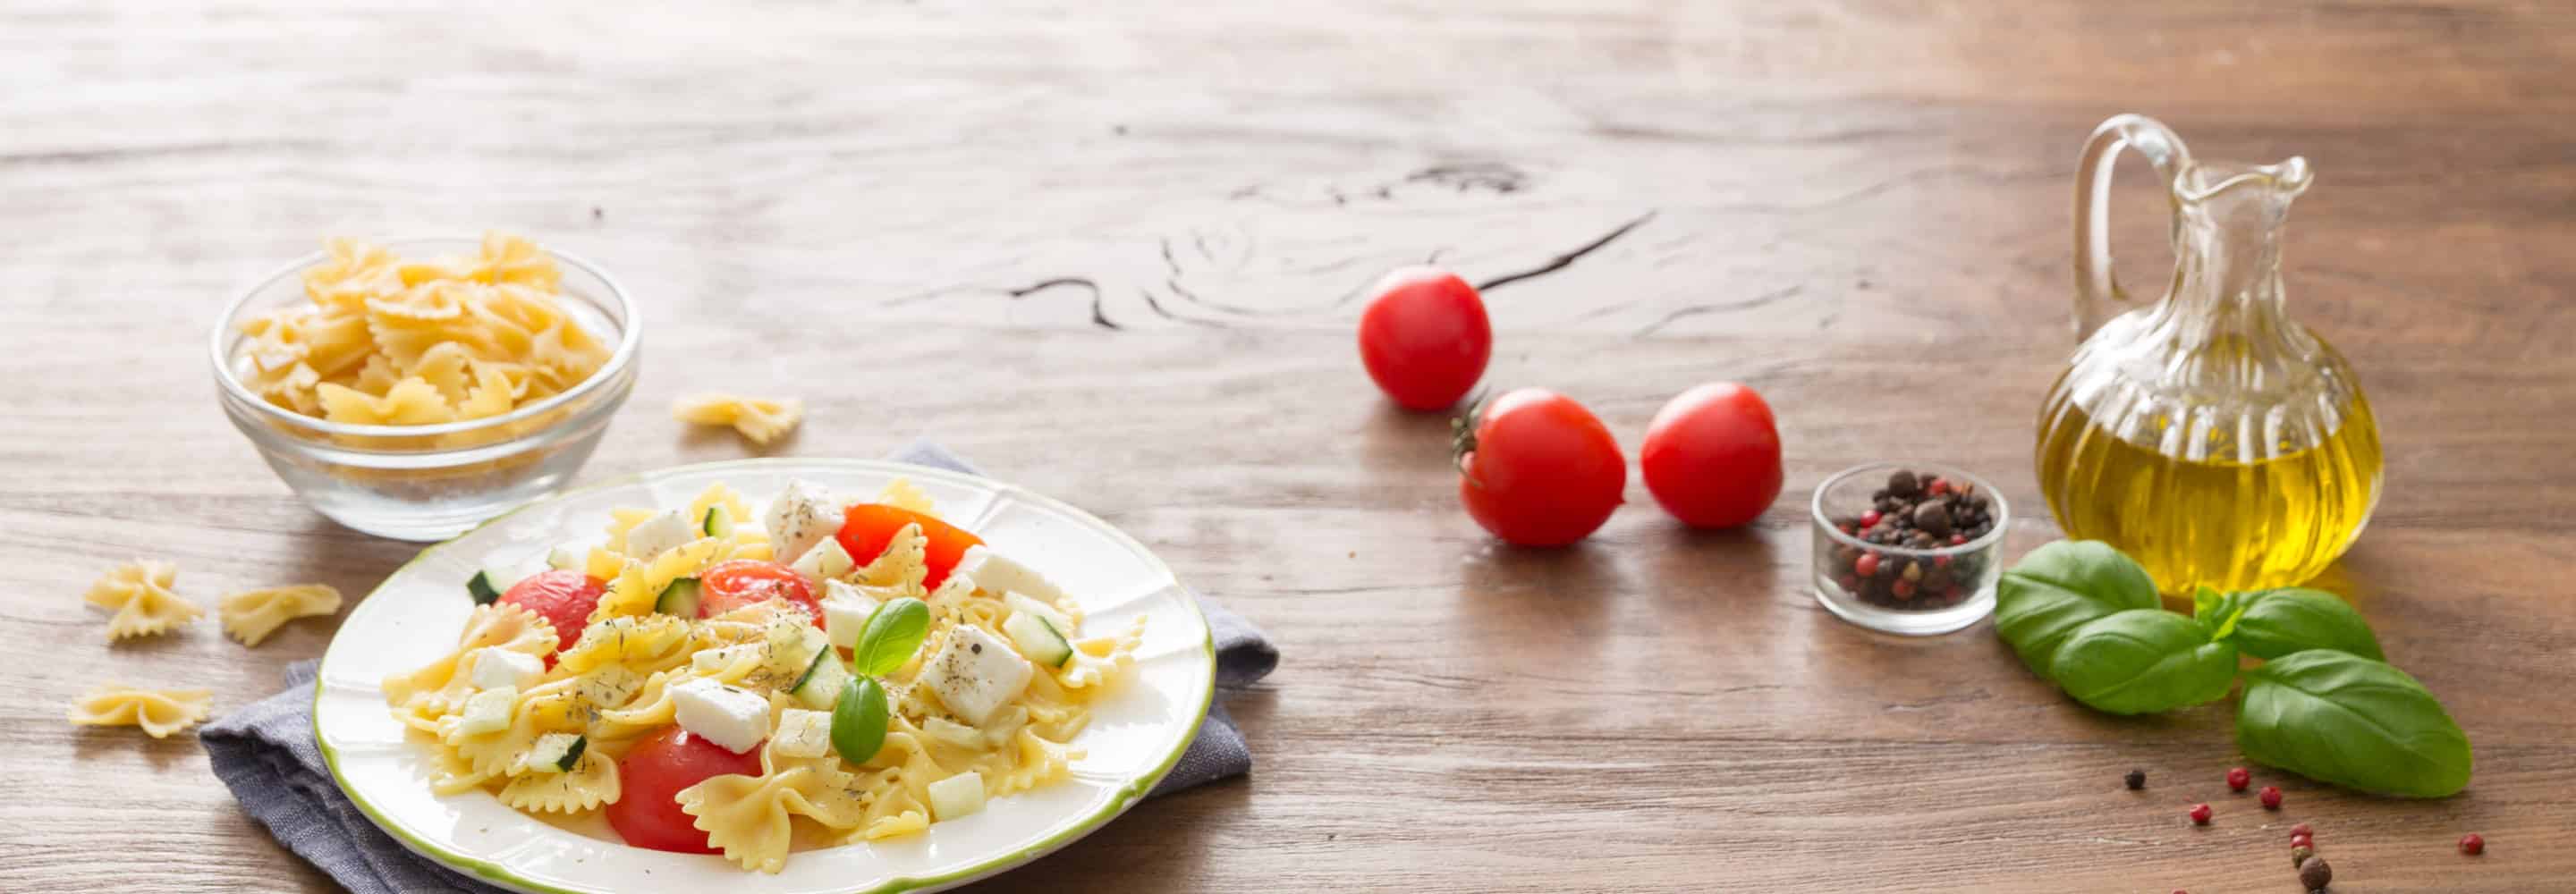 Les 5 Astuces Pour Réussir Sa Salade De Pâtes - Galbani